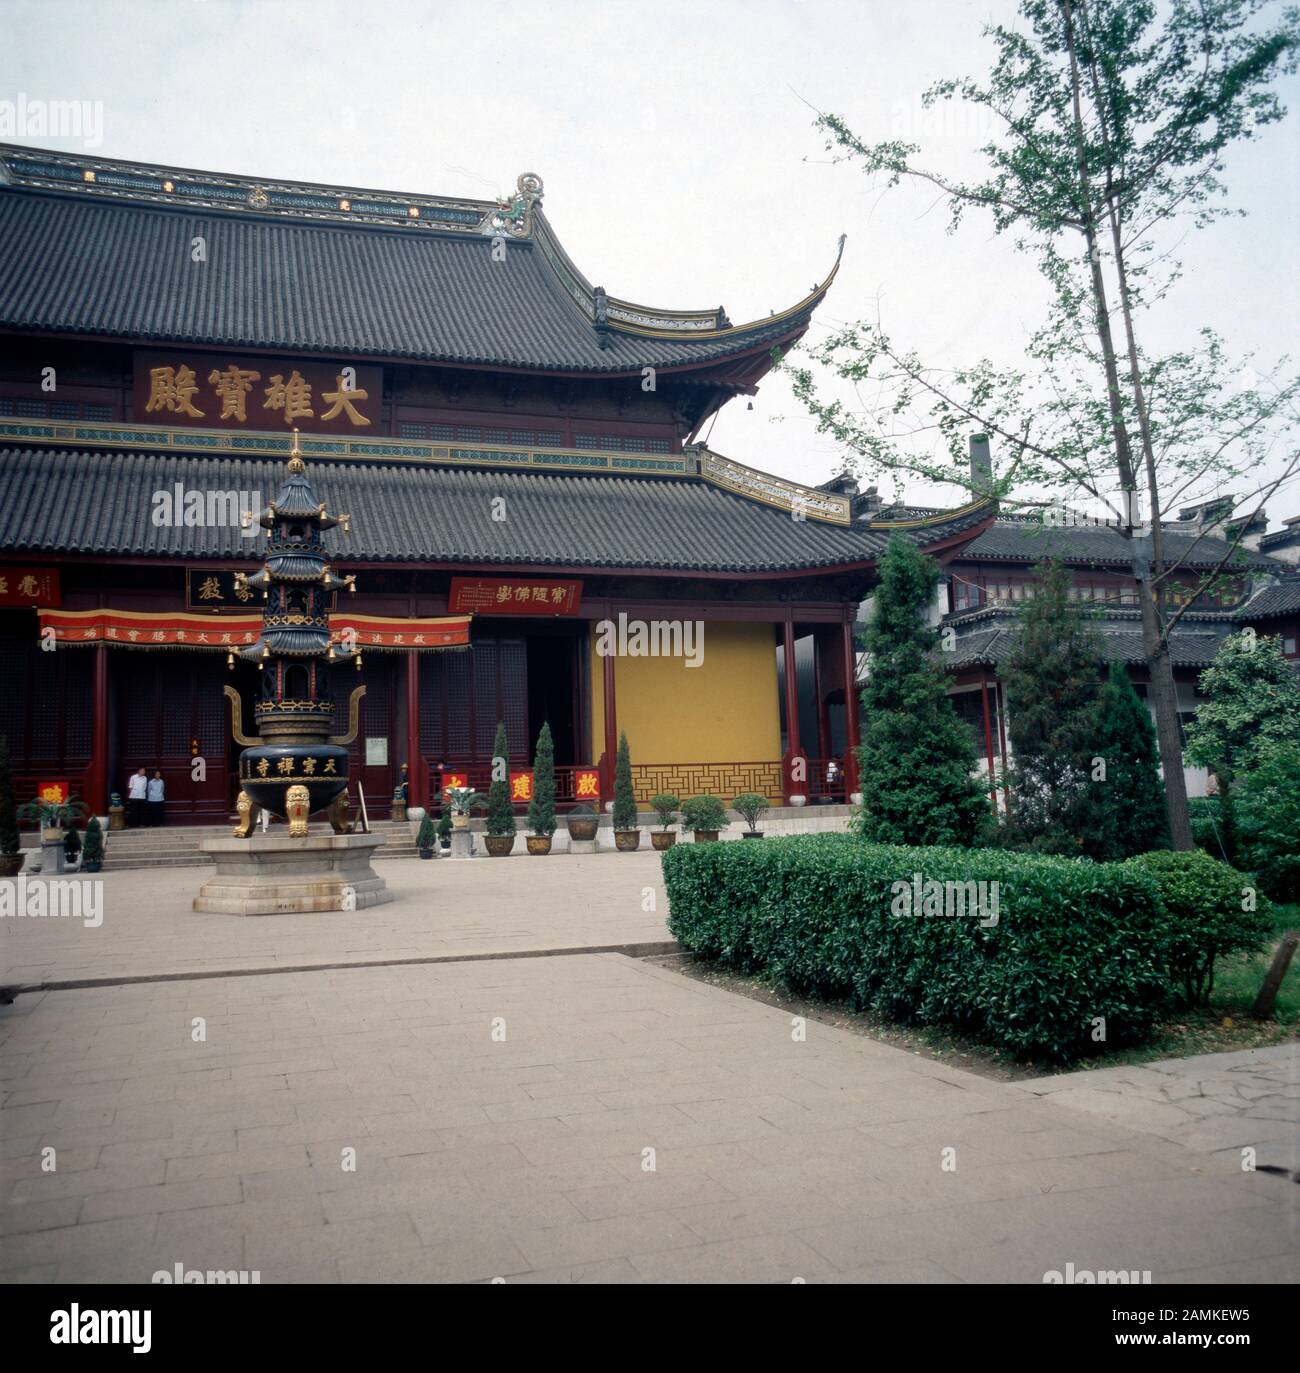 VOR der Halle der vier Himmelskönige im Lingyin Tempel in der Stadt Hangzhou, Cina 1980er Jahre. Di fronte alla Hall of Four Heavenly Kings al Tempio Lingyin nella città di Hangzhou, Cina 1980s. Foto Stock